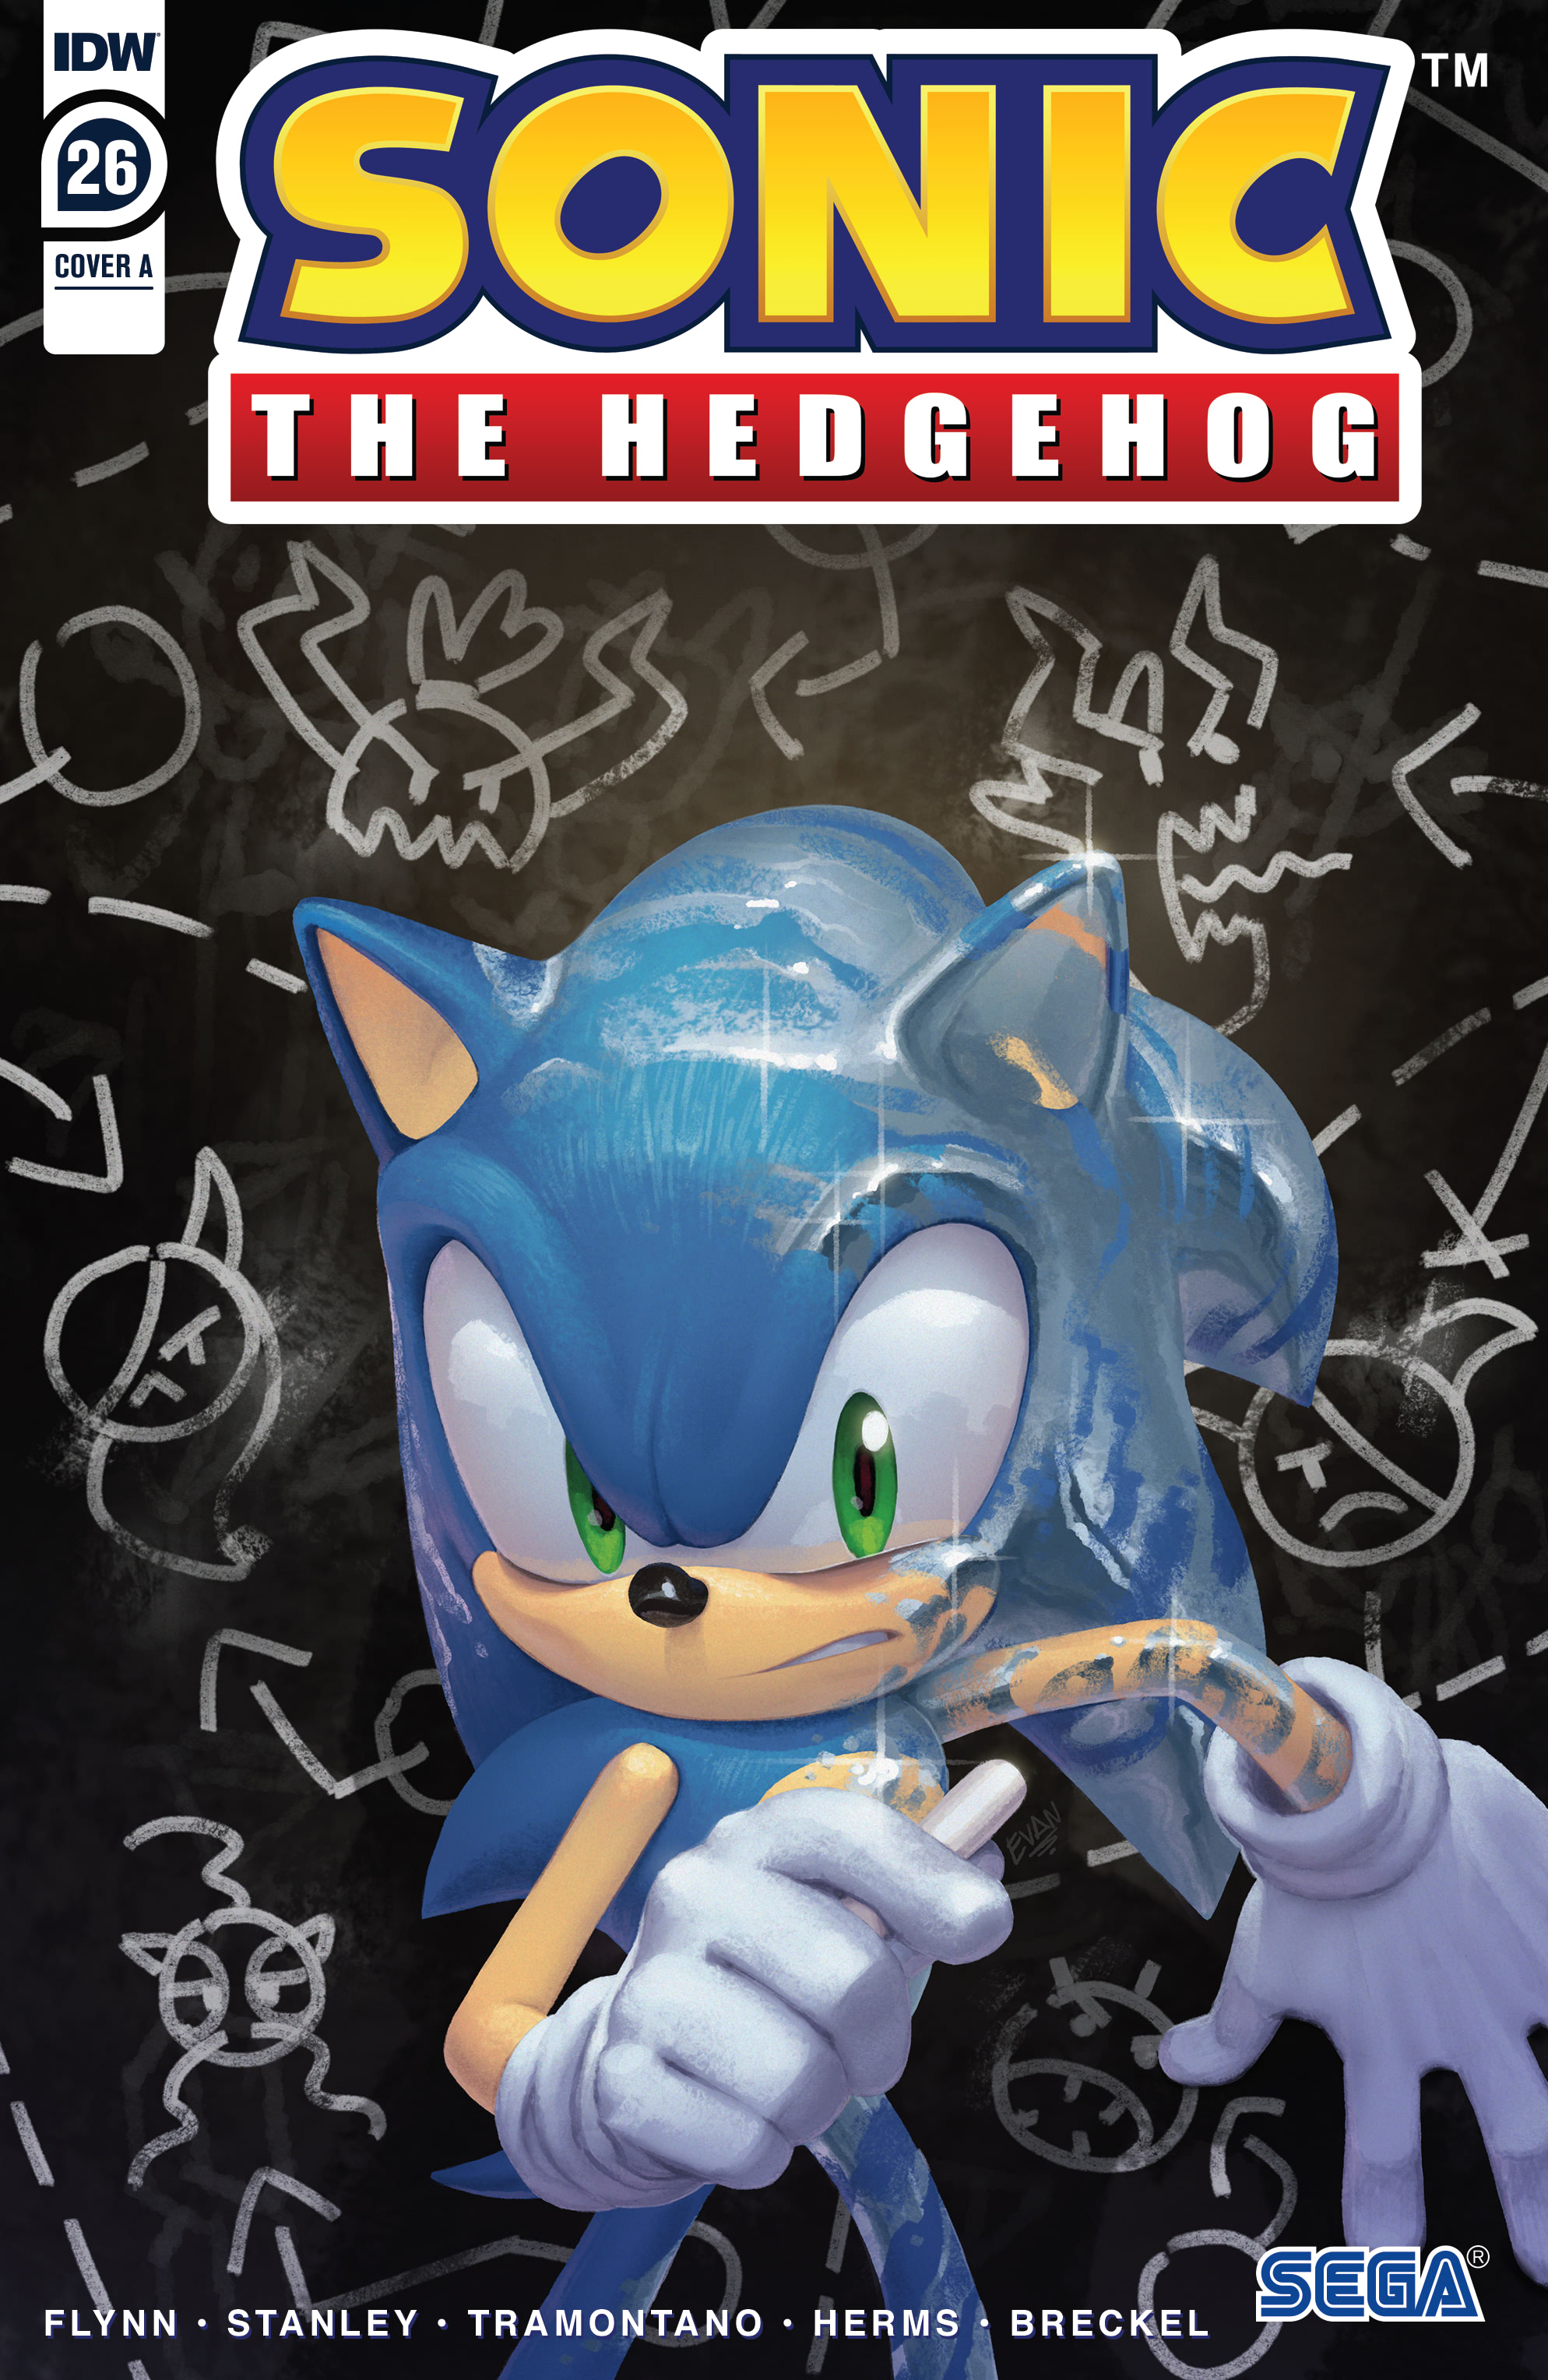 Sonic The Hedgehog IDW (#1-68) - Read Comic Online Sonic The Hedgehog #26